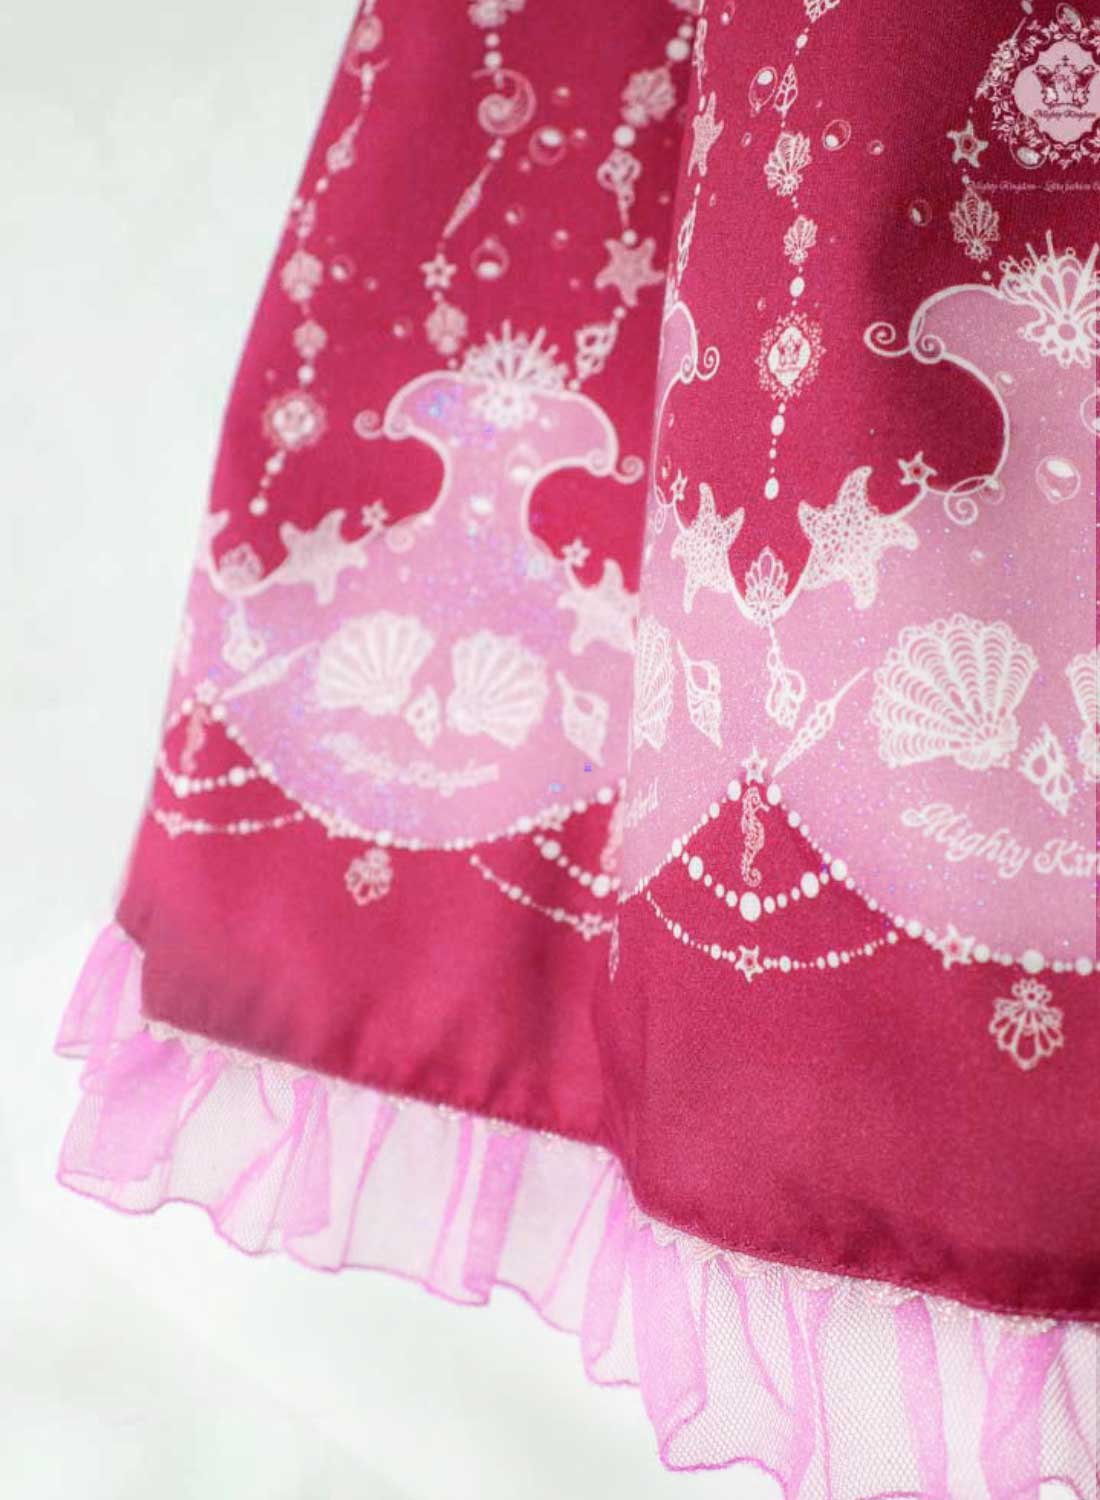 Detailansicht des Stoffmusters des Magical Sea World Kleides in rosa-rot mit Glitzer